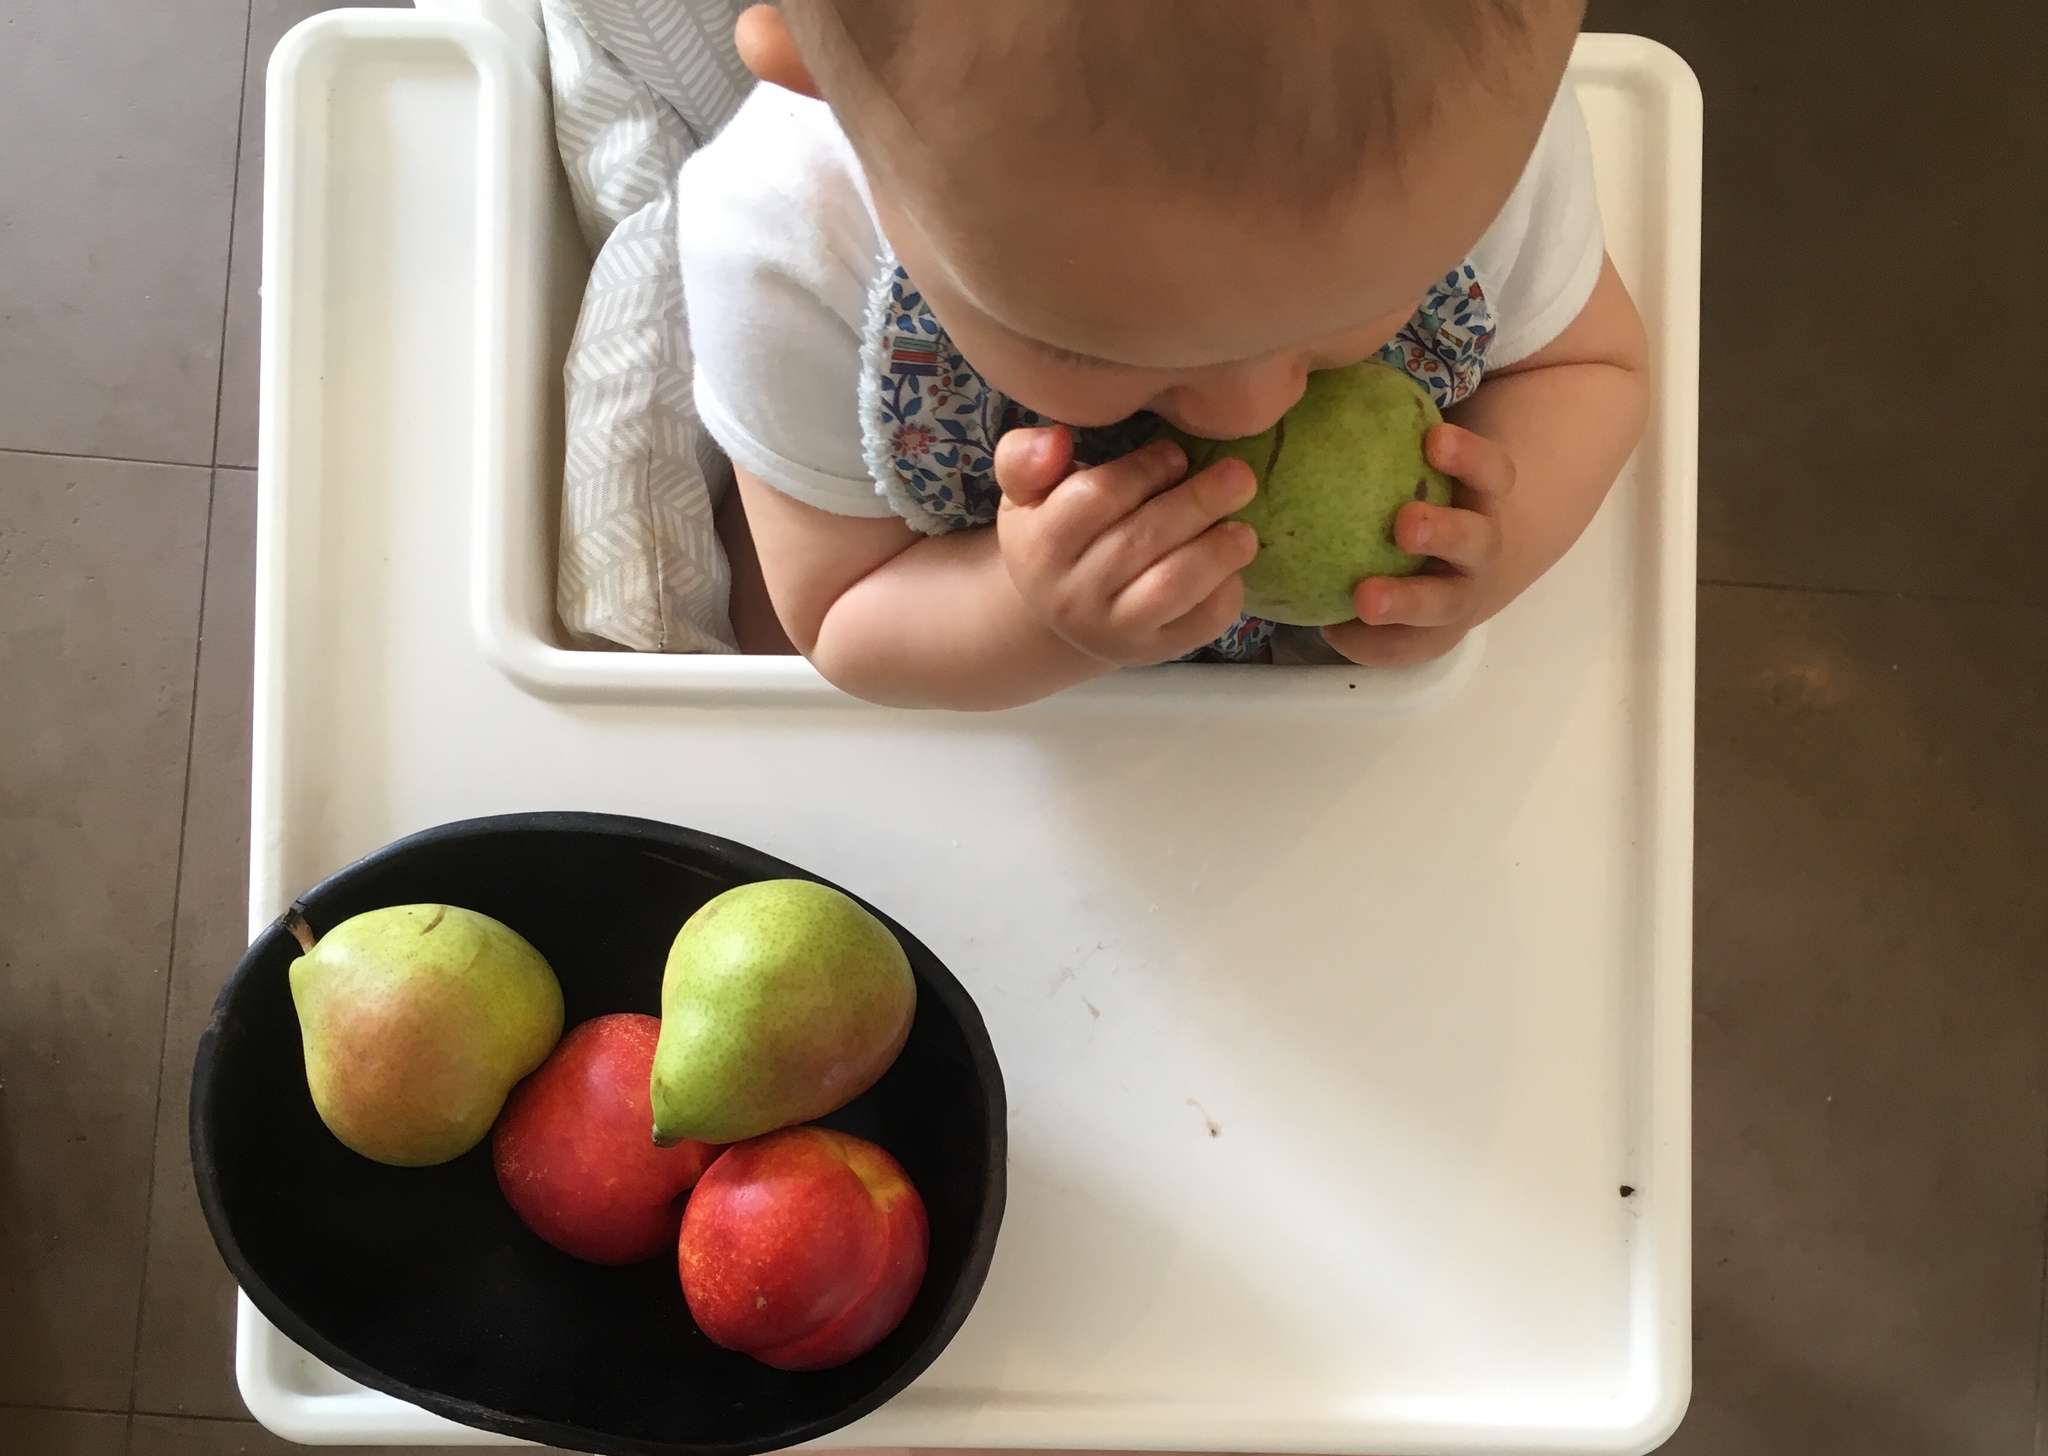 bébé mange des fruits (sucre naturel)